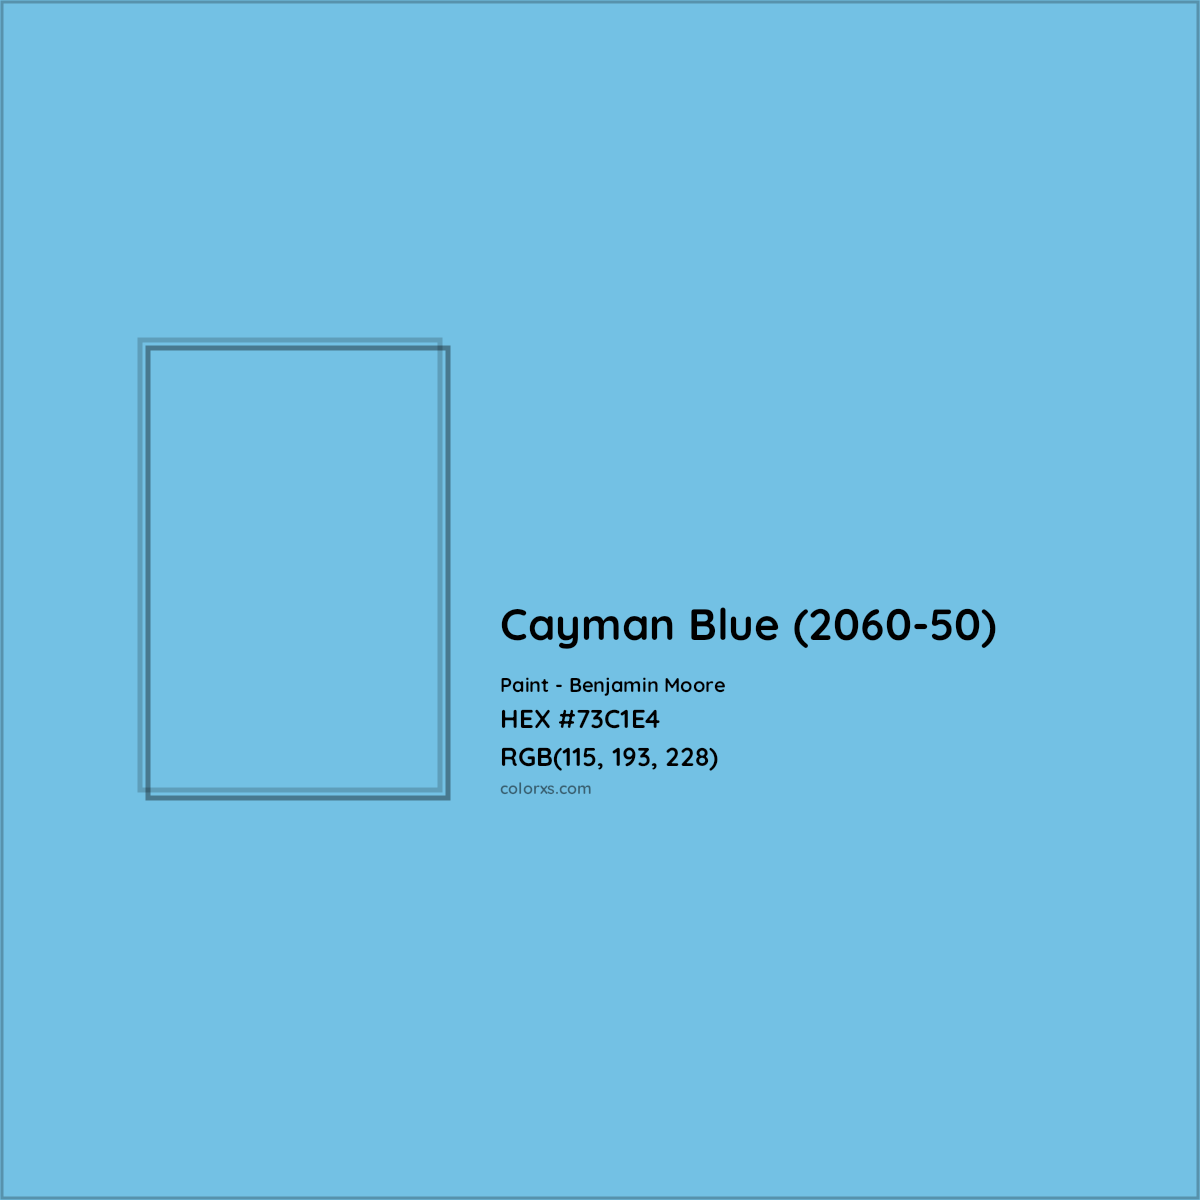 HEX #73C1E4 Cayman Blue (2060-50) Paint Benjamin Moore - Color Code